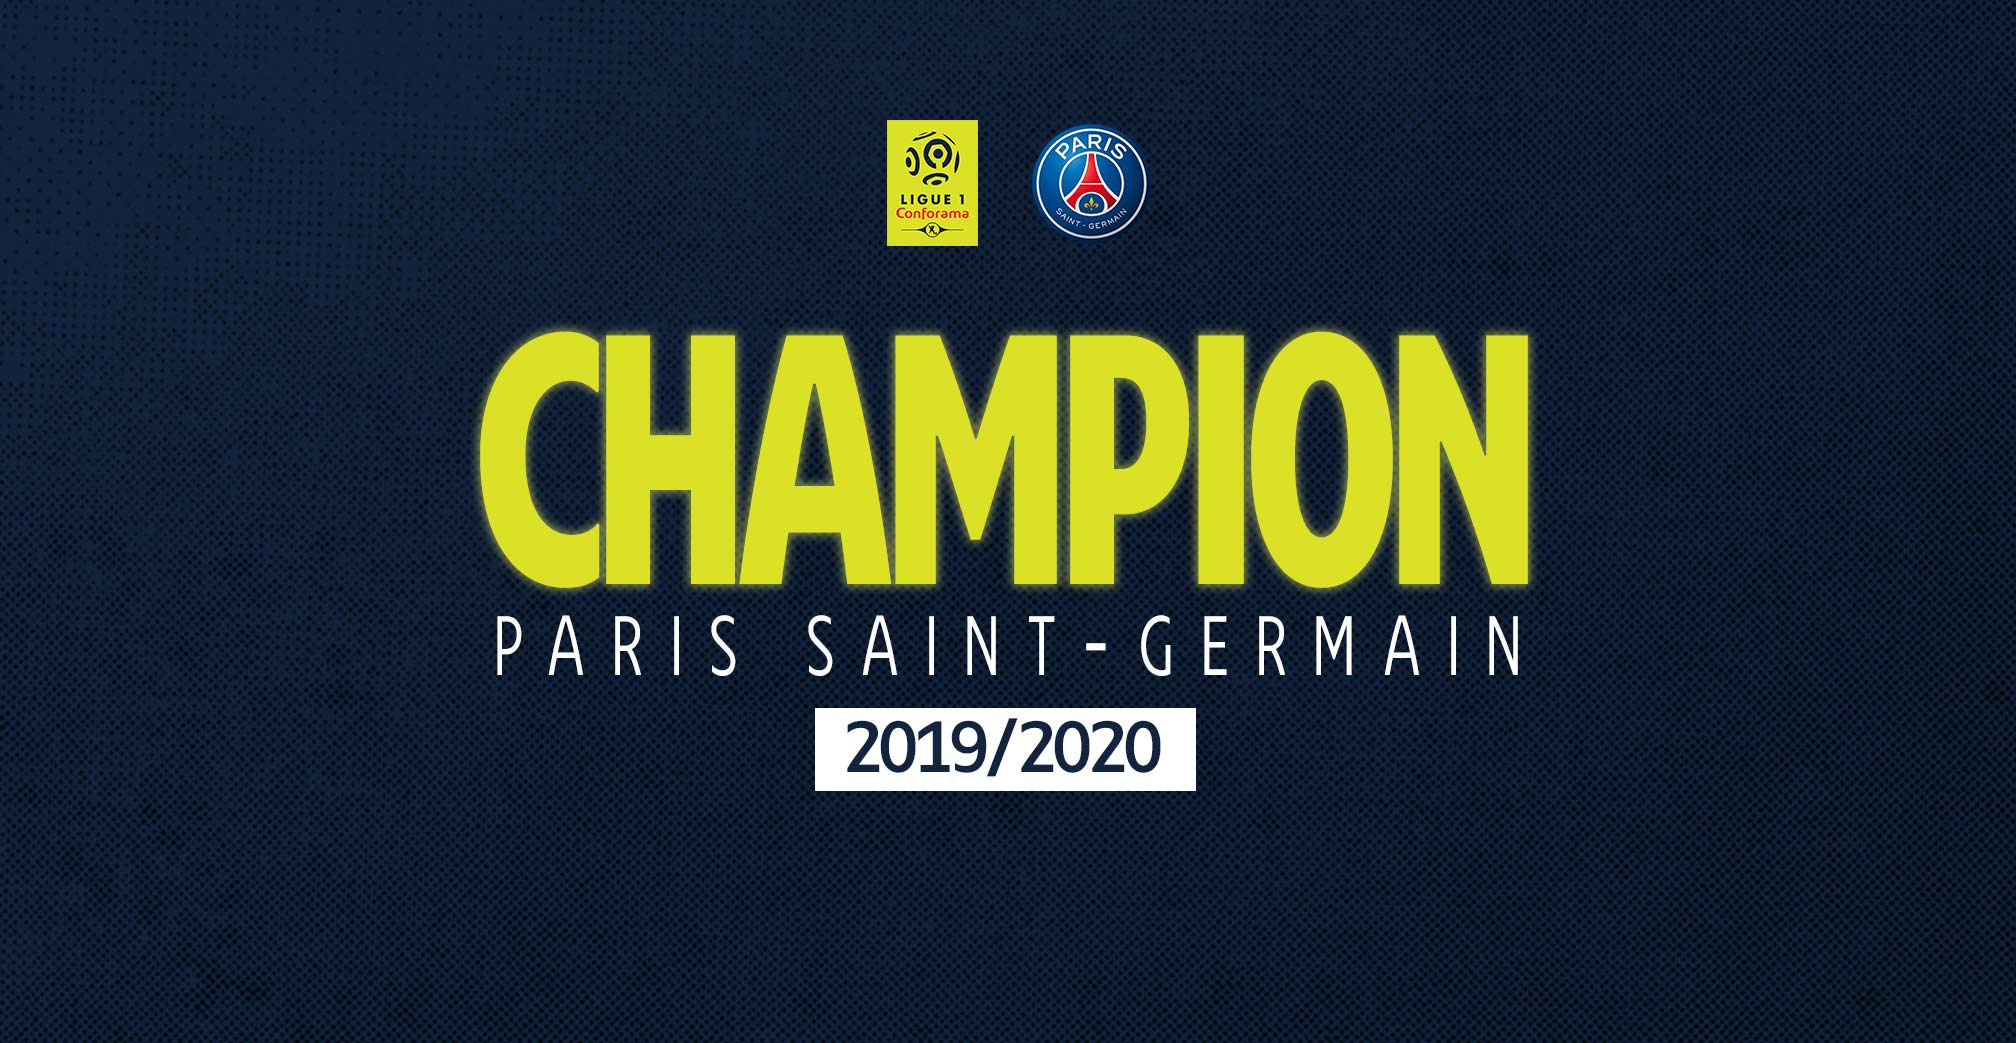 PSG equal OM with ninth Ligue 1 Conforama title